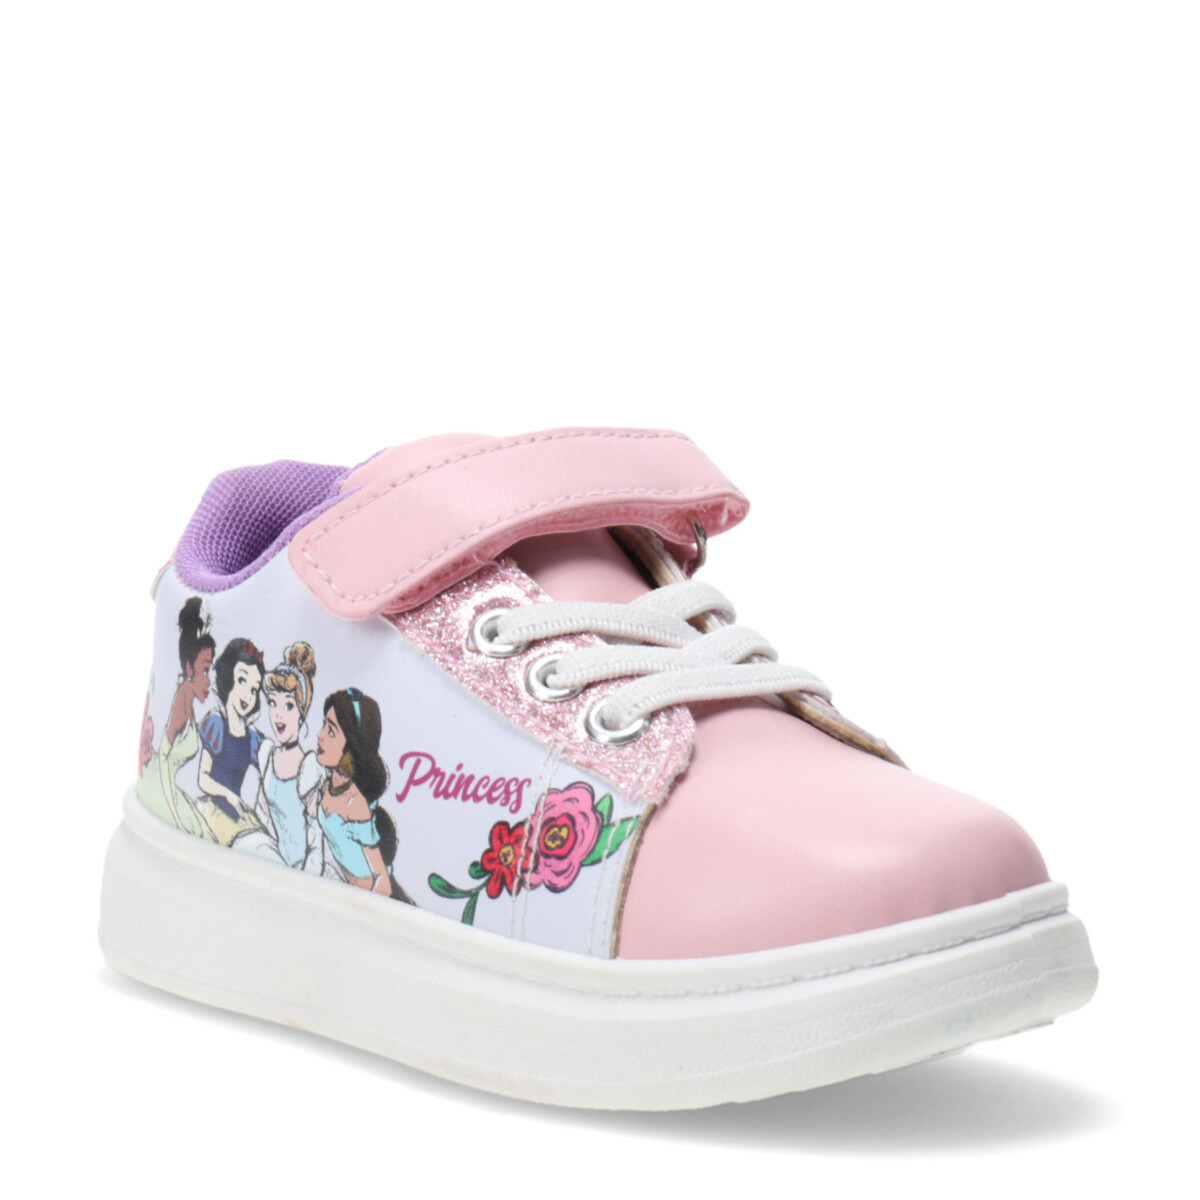 Princesa c/Velcros Disney - Rosa/Blanco 